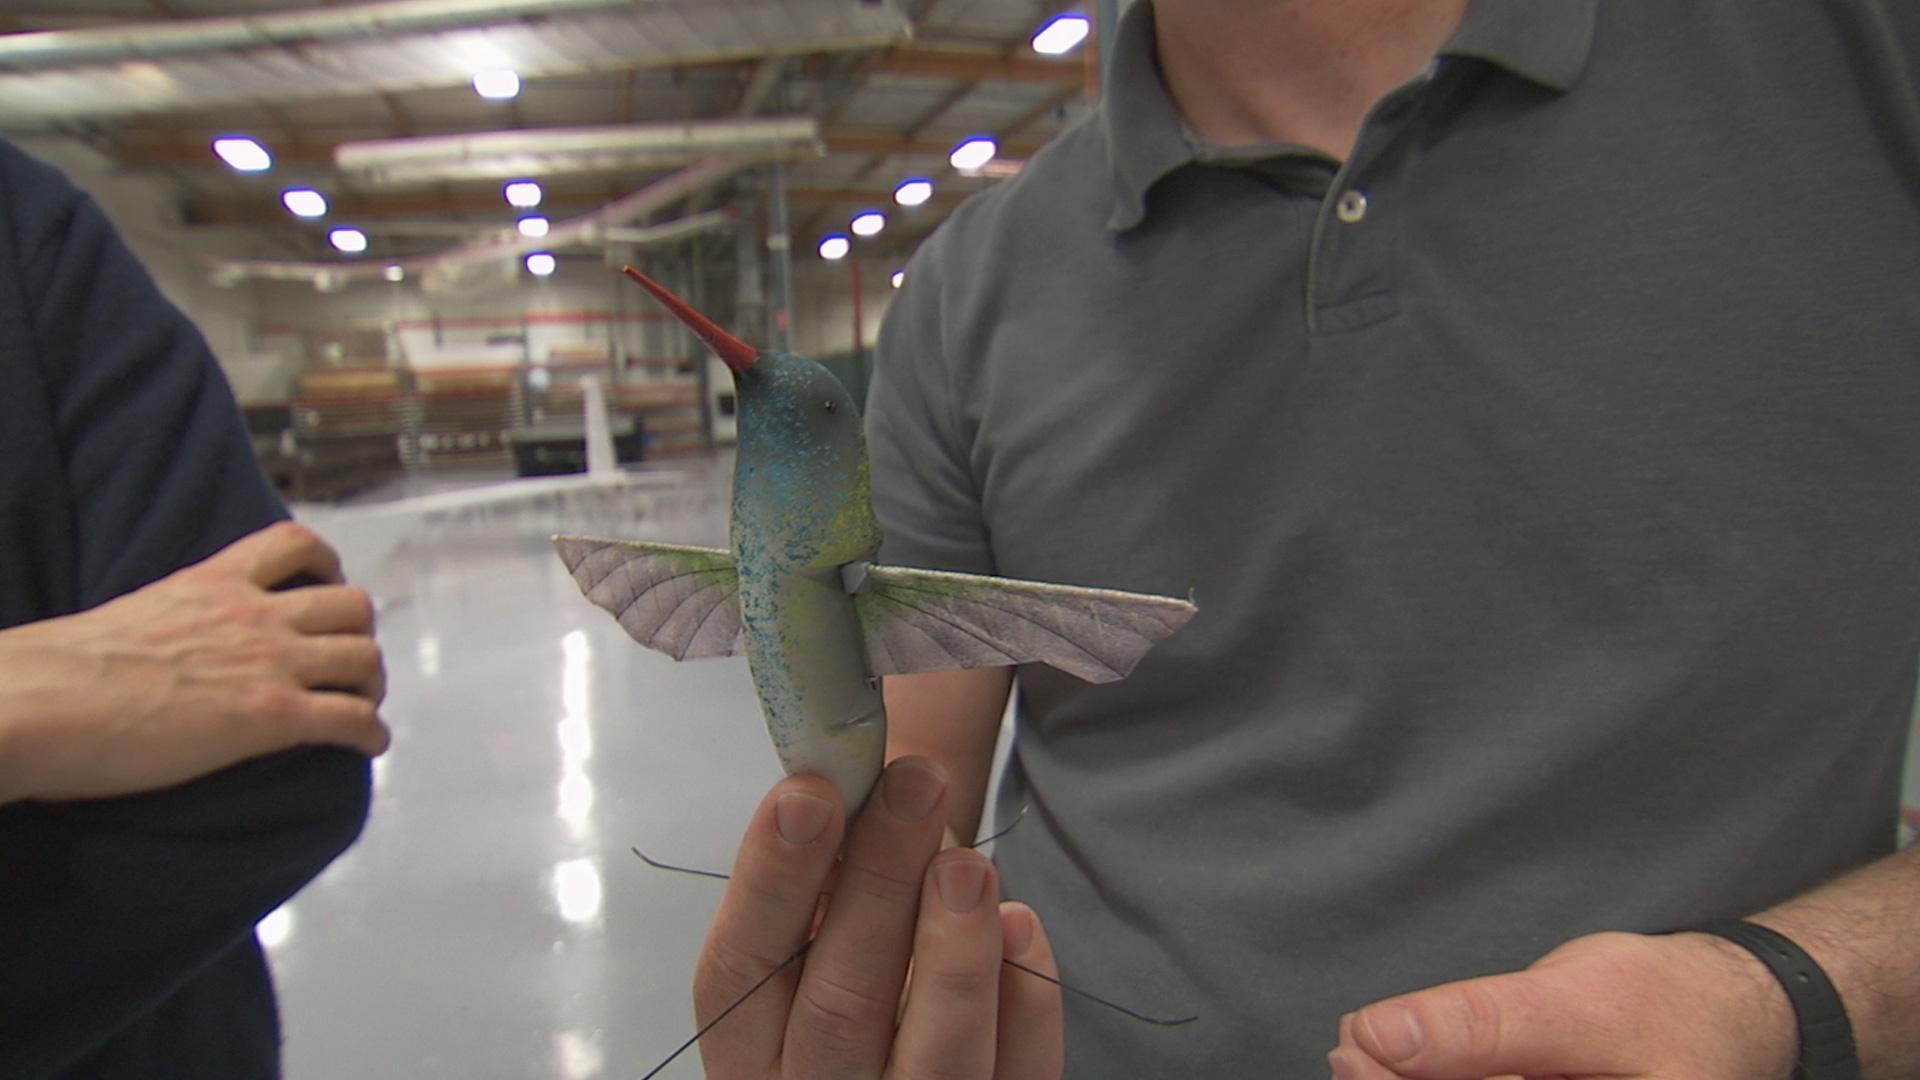 wing hummingbird drone